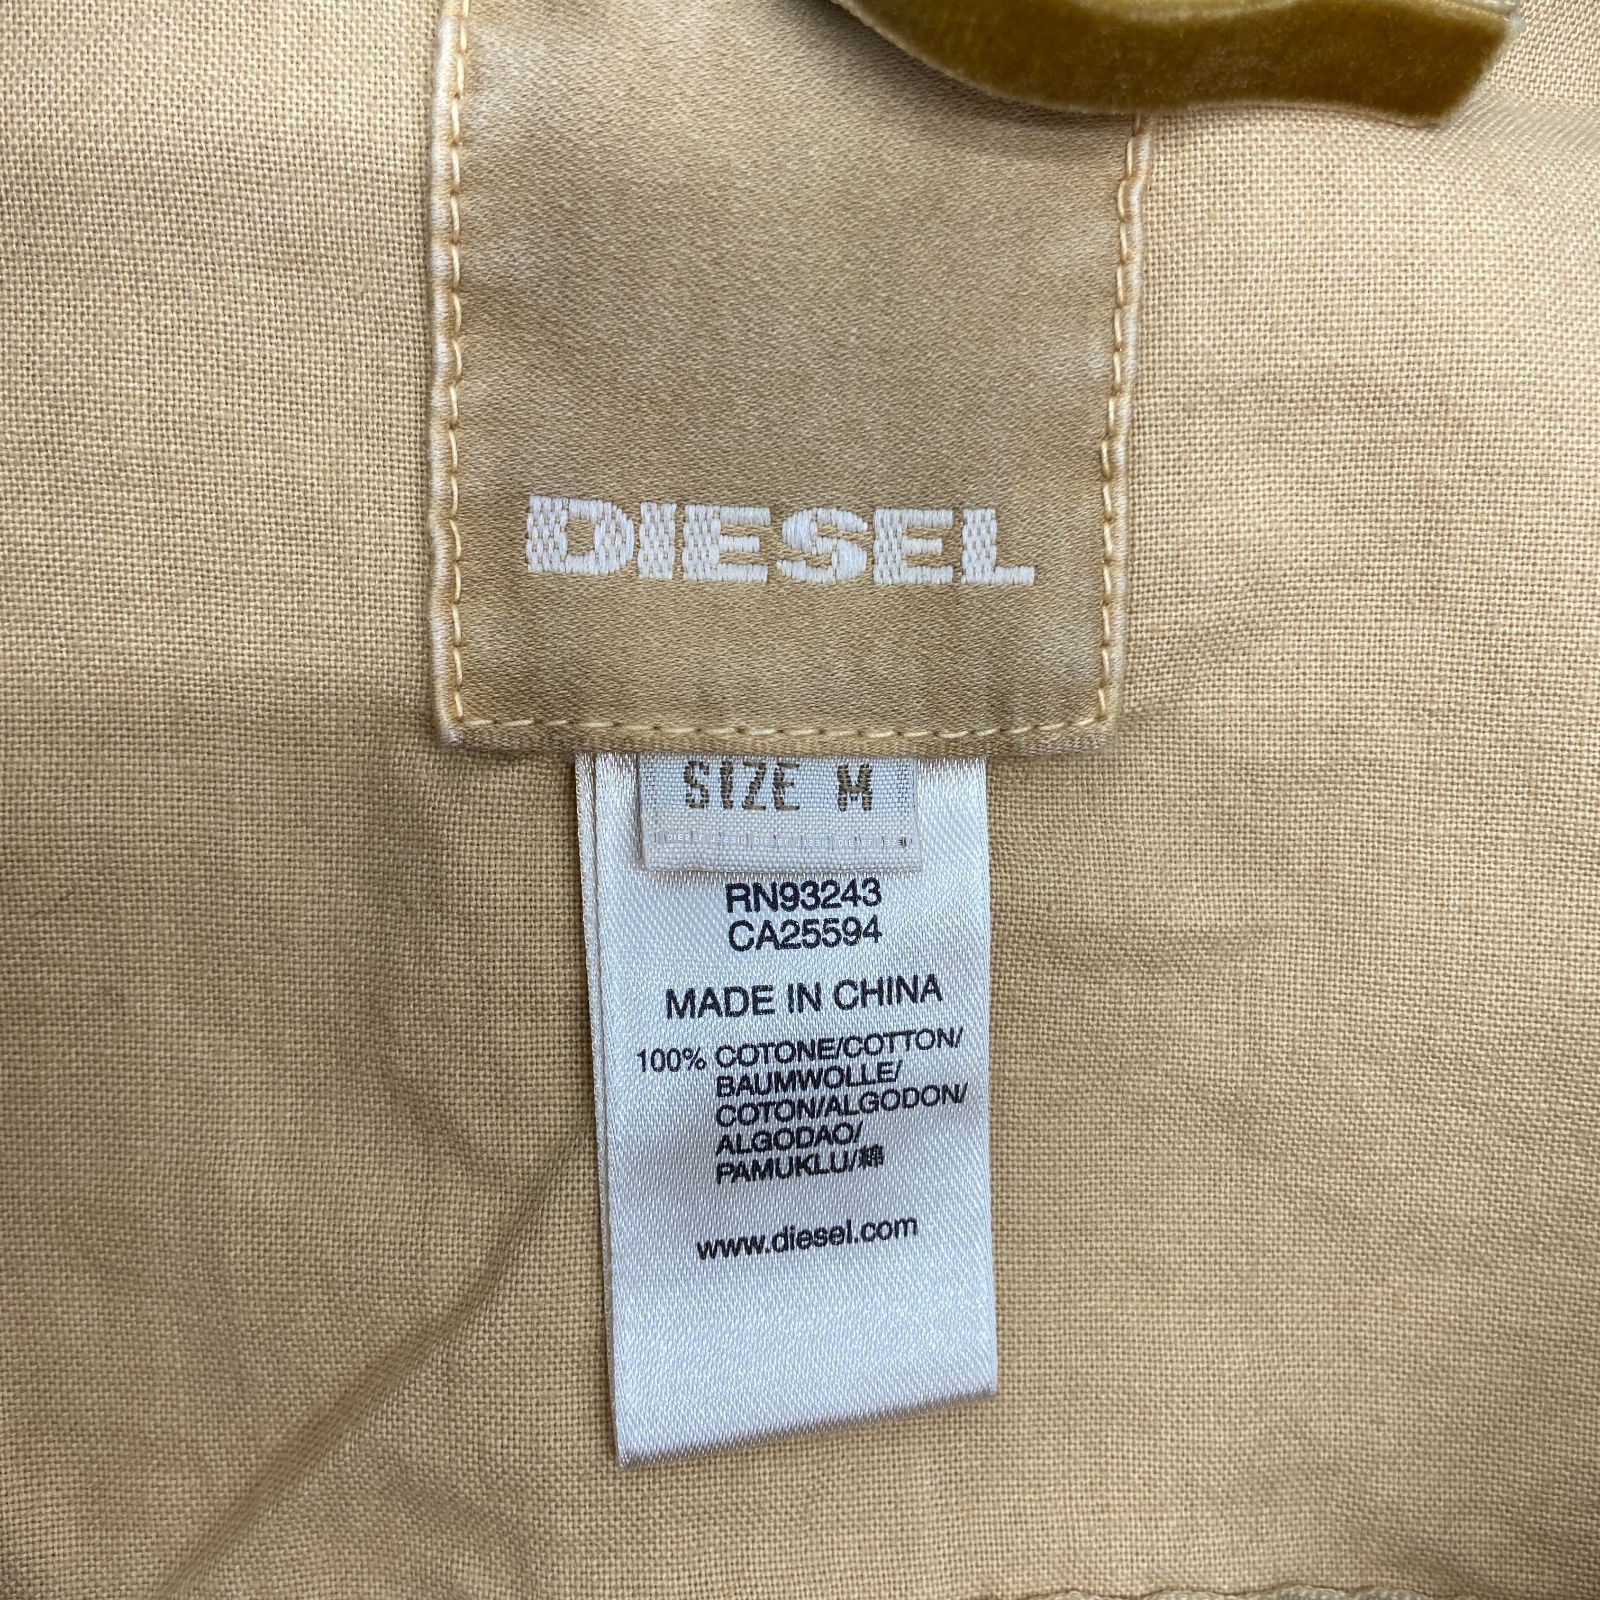 DIESEL ディーゼル M-65 フィールドジャケット ミリタリー